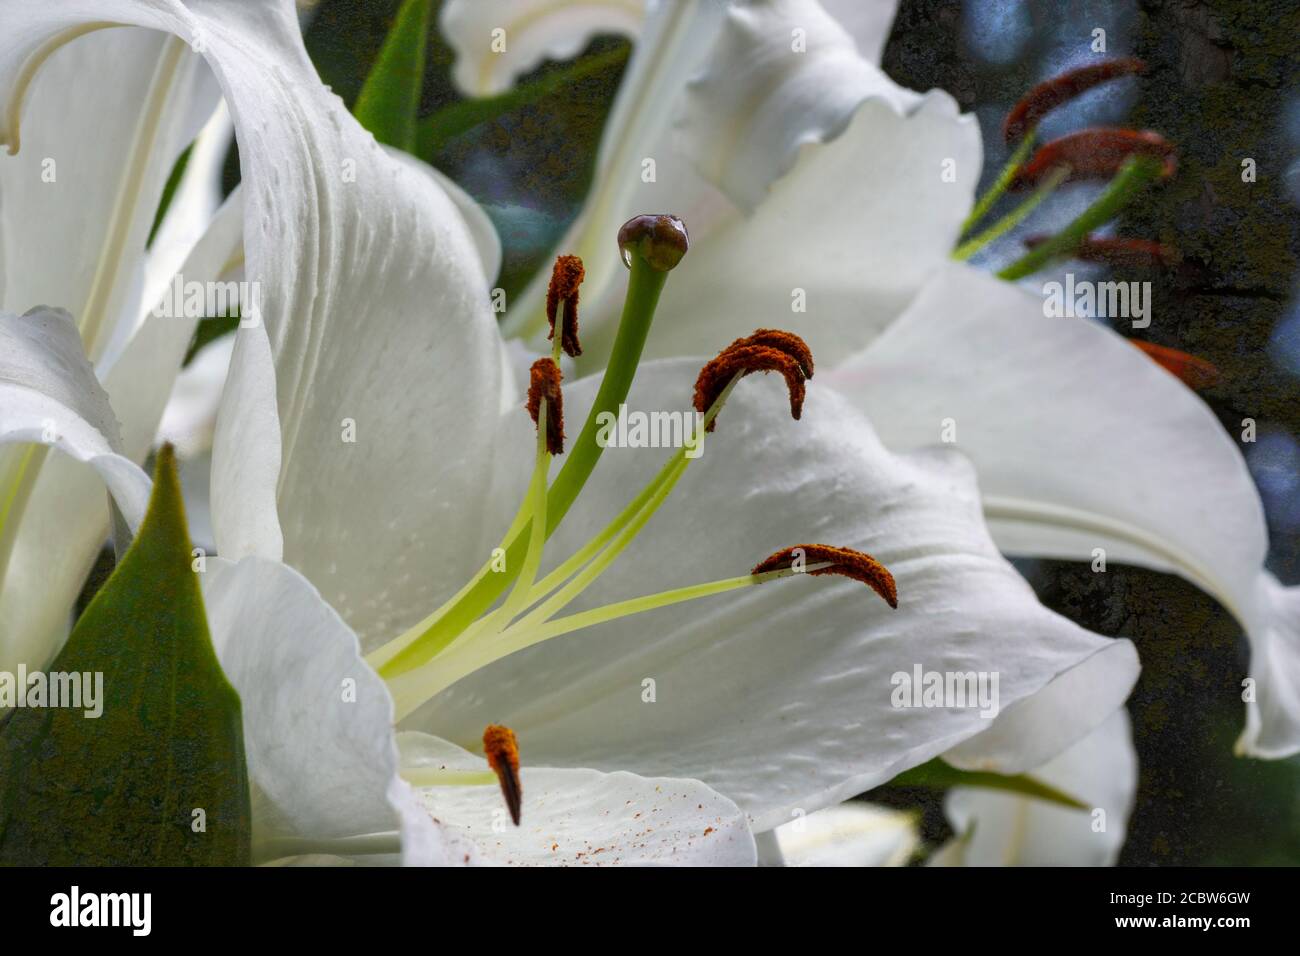 White Lily flowers, Theodor Haber variety Stock Photo